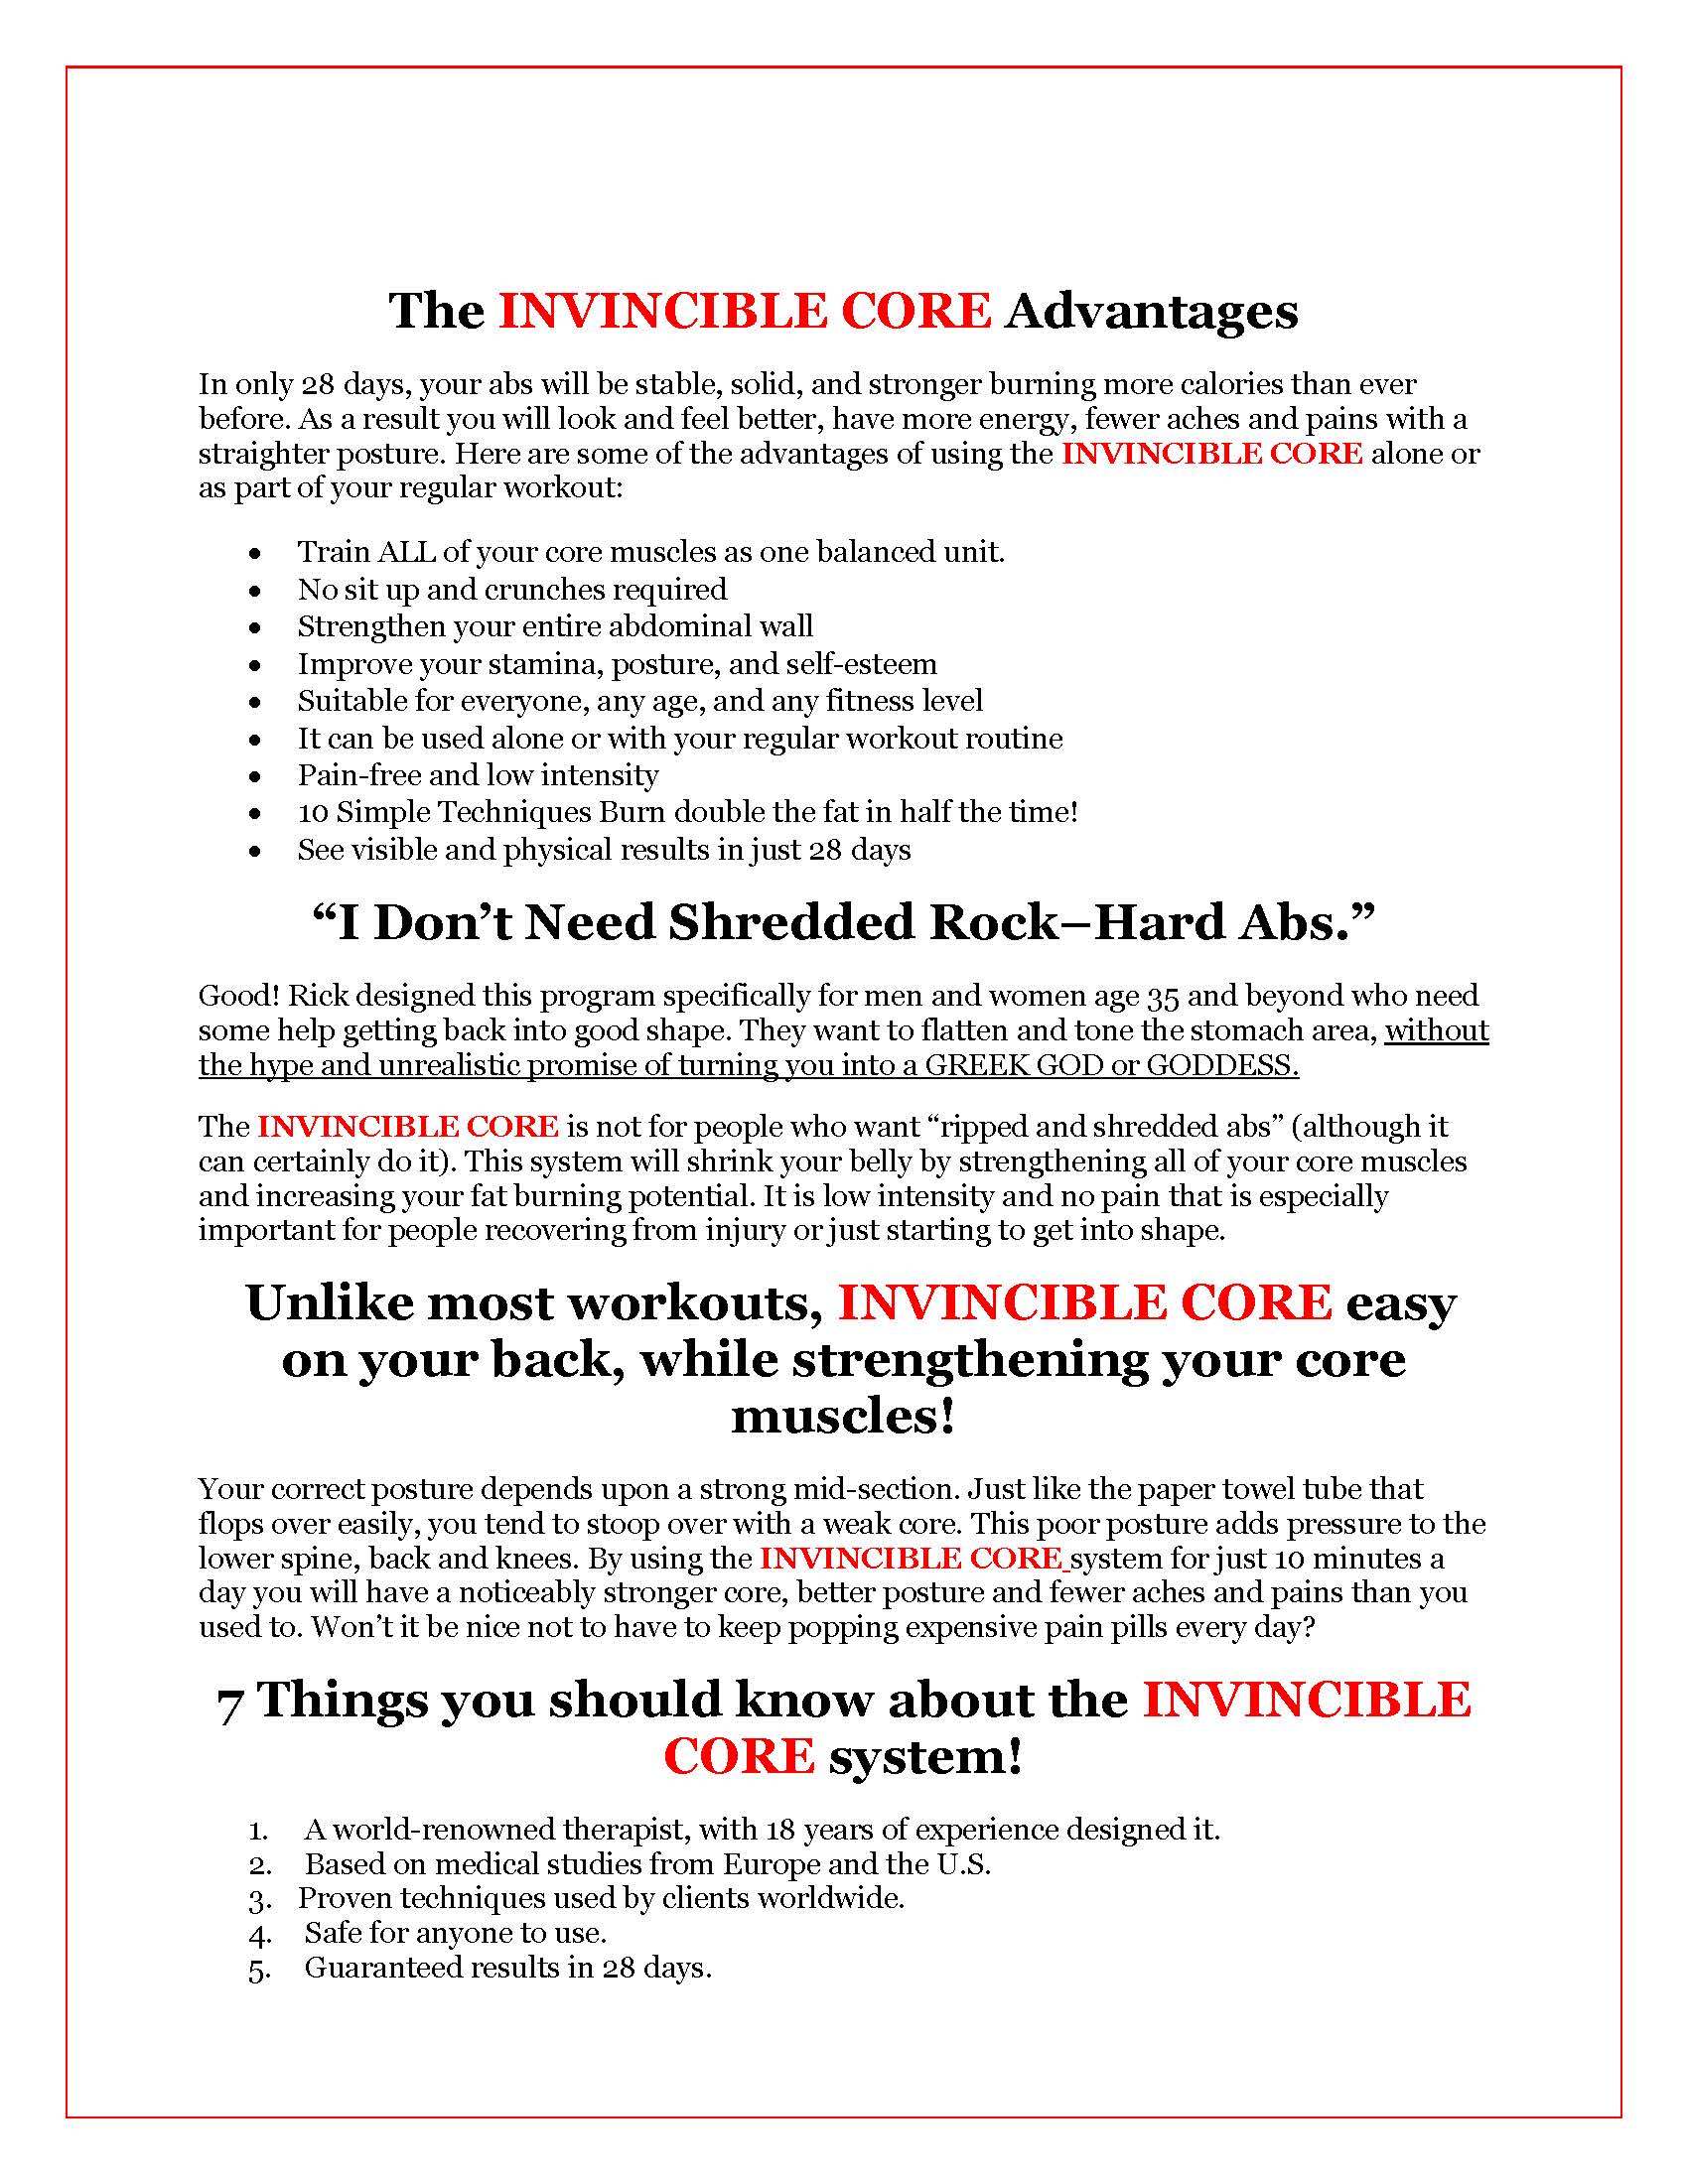 Landing Page - Invincible Core_Page_6